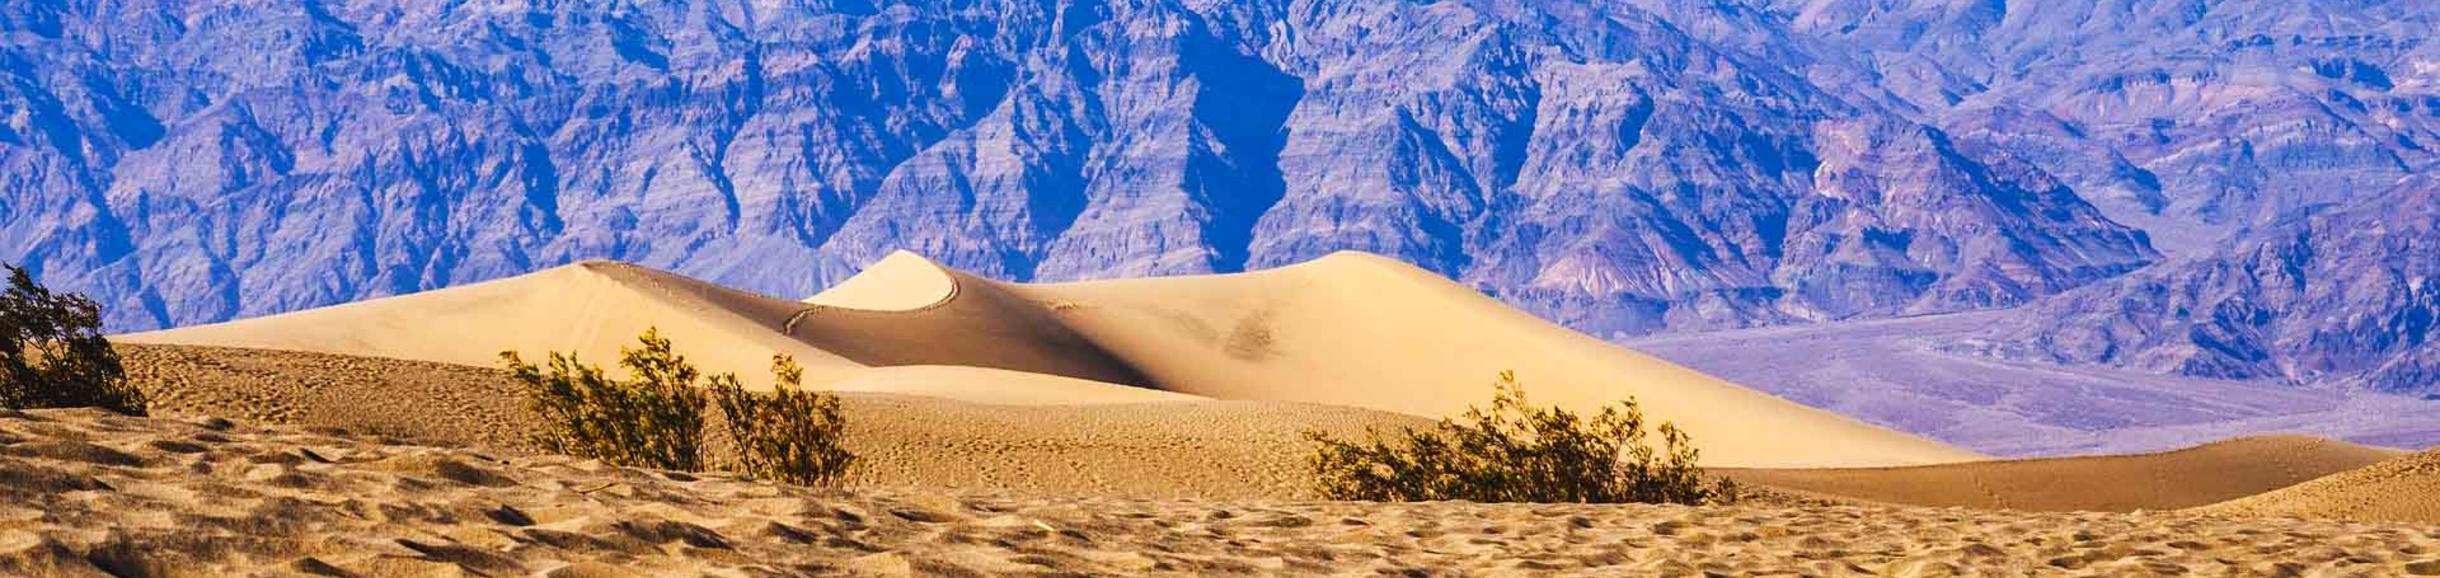 Mojave Desert, Death Valley / pixabay.com